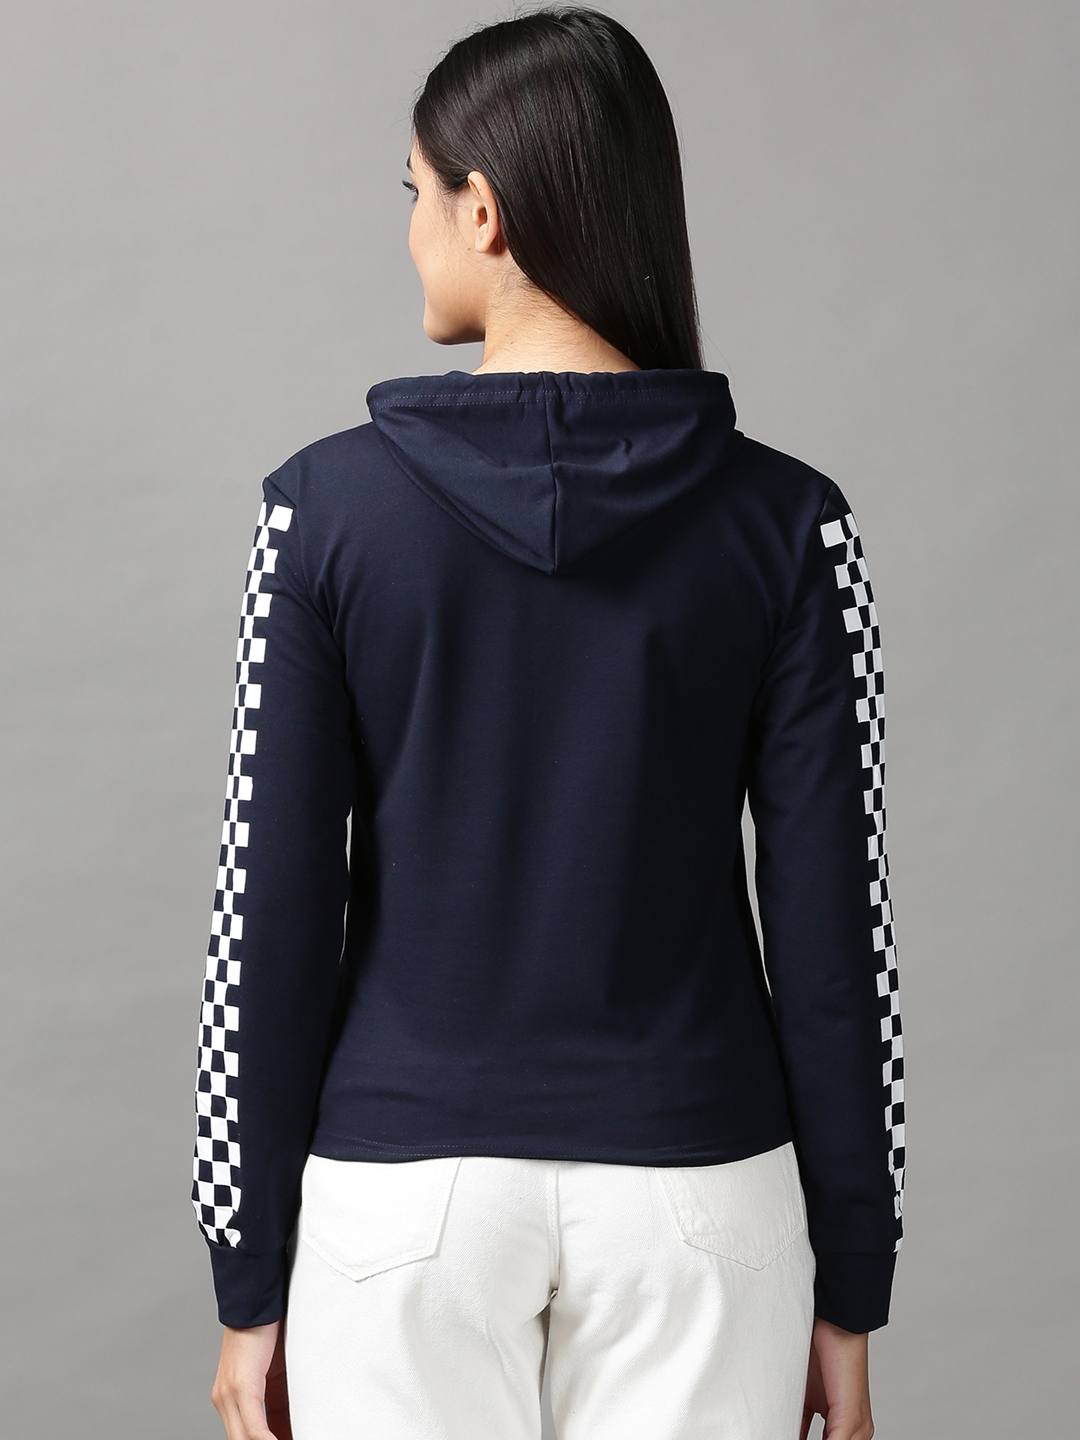 Showoff | SHOWOFF Women Navy Blue Solid Hooded Full Sleeves Pullover Sweatshirt 3